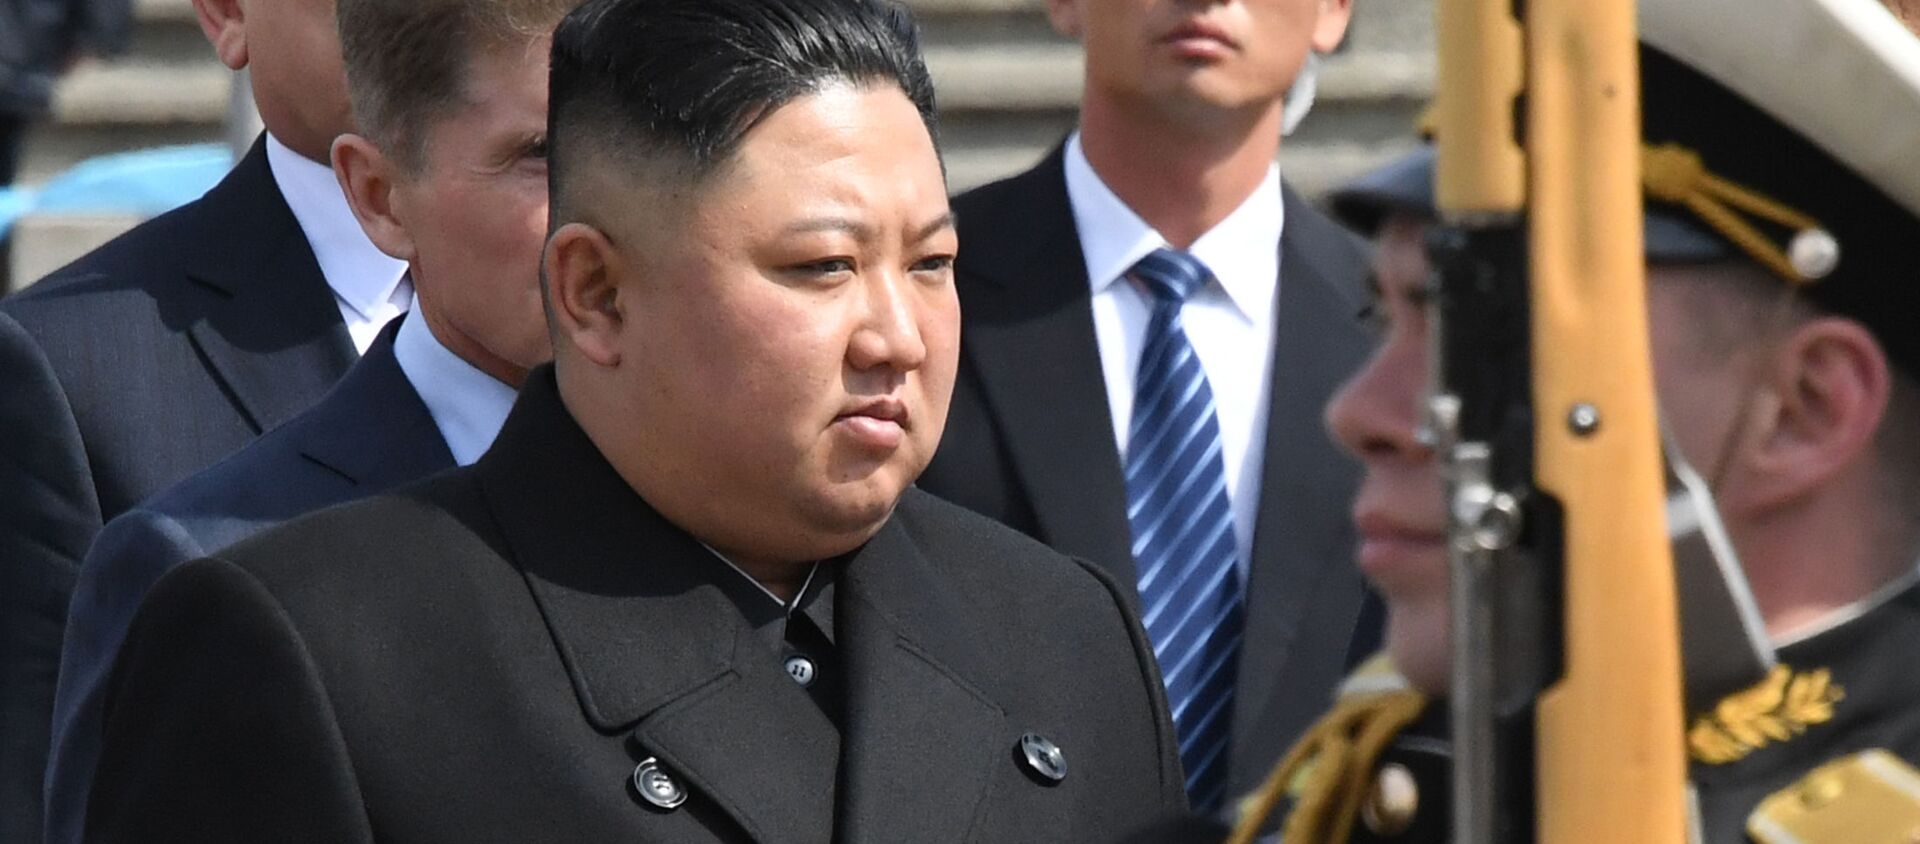 Šiaurės Korėjos lyderis Kim Čong Inas - Sputnik Lietuva, 1920, 28.04.2020